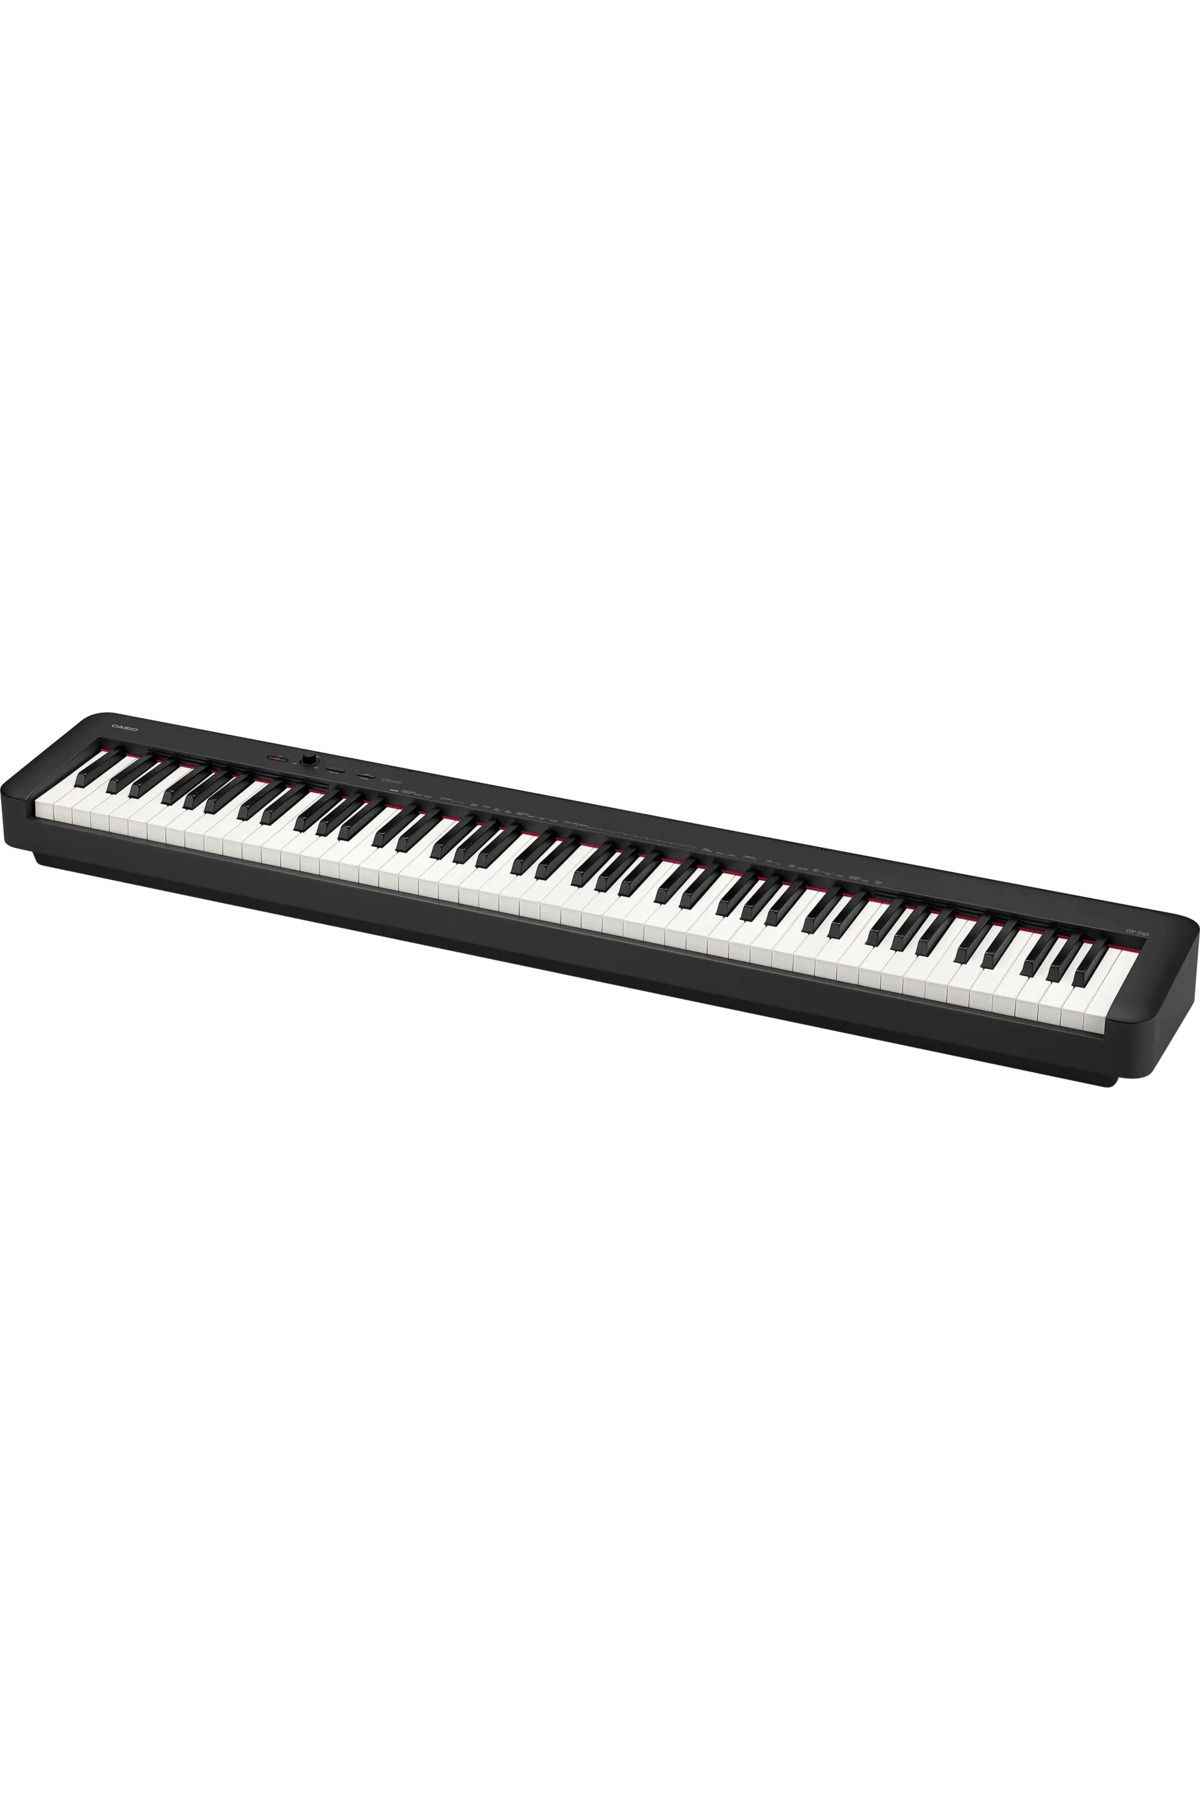 Casio Cdp-s160bkc2 Siyah Taşınabilir Dijital Piyano